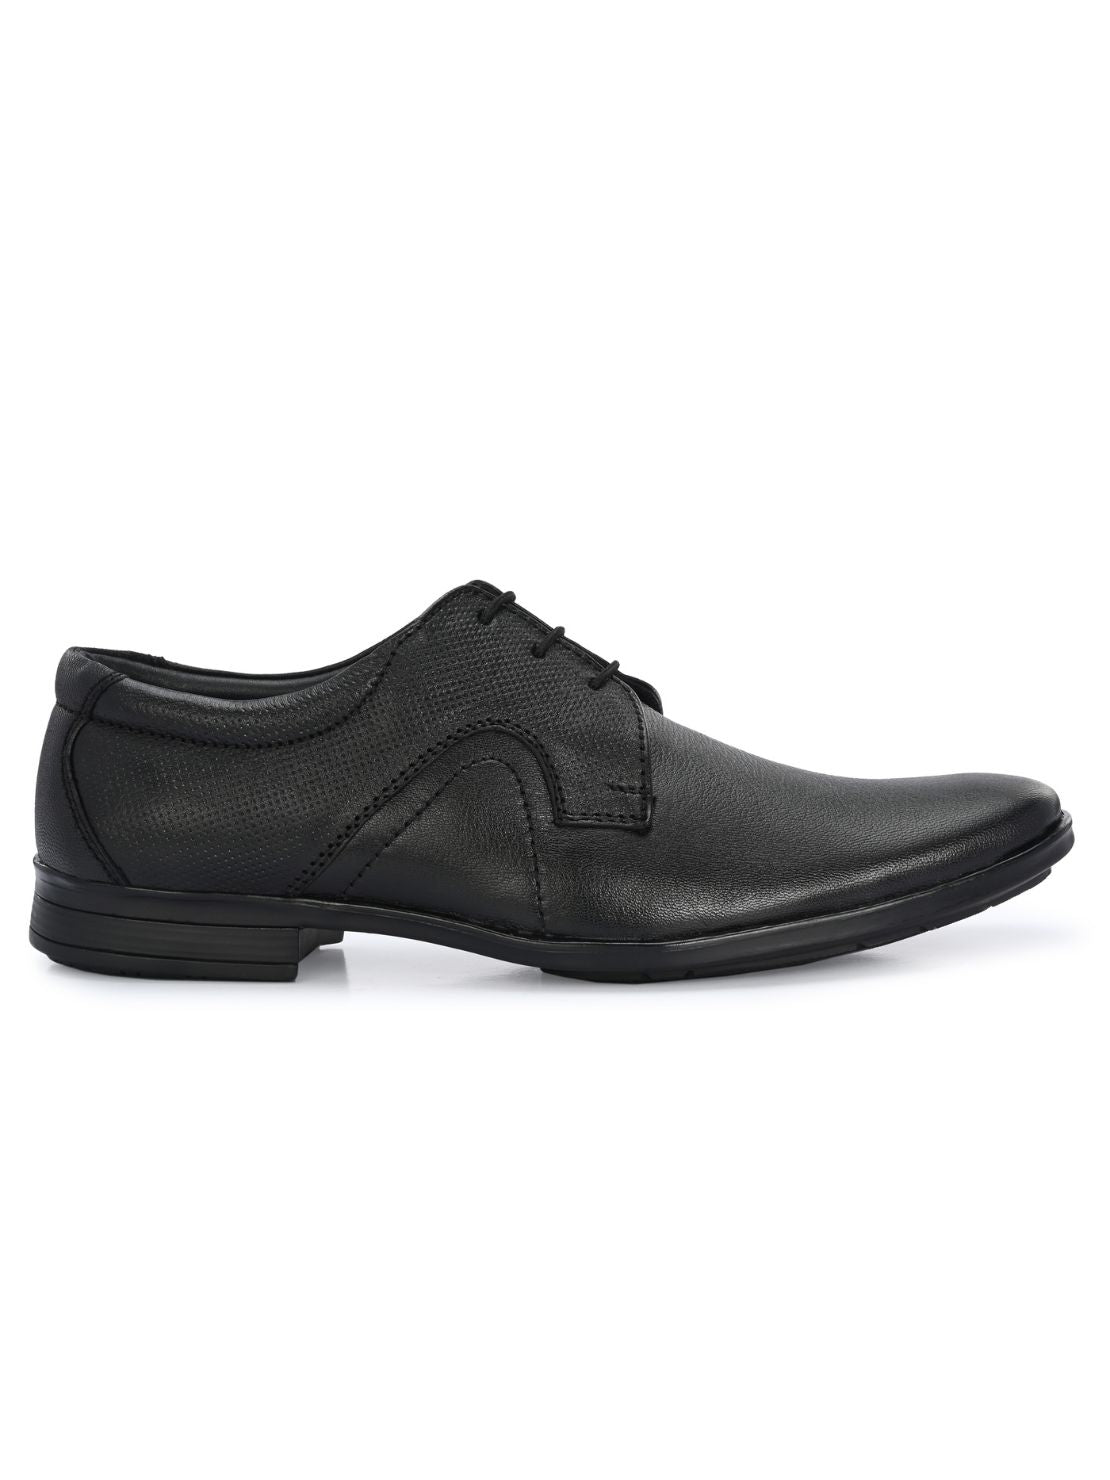 Guava Men's Black Leather Derby Formal Shoes Lace-Up GV15JA871